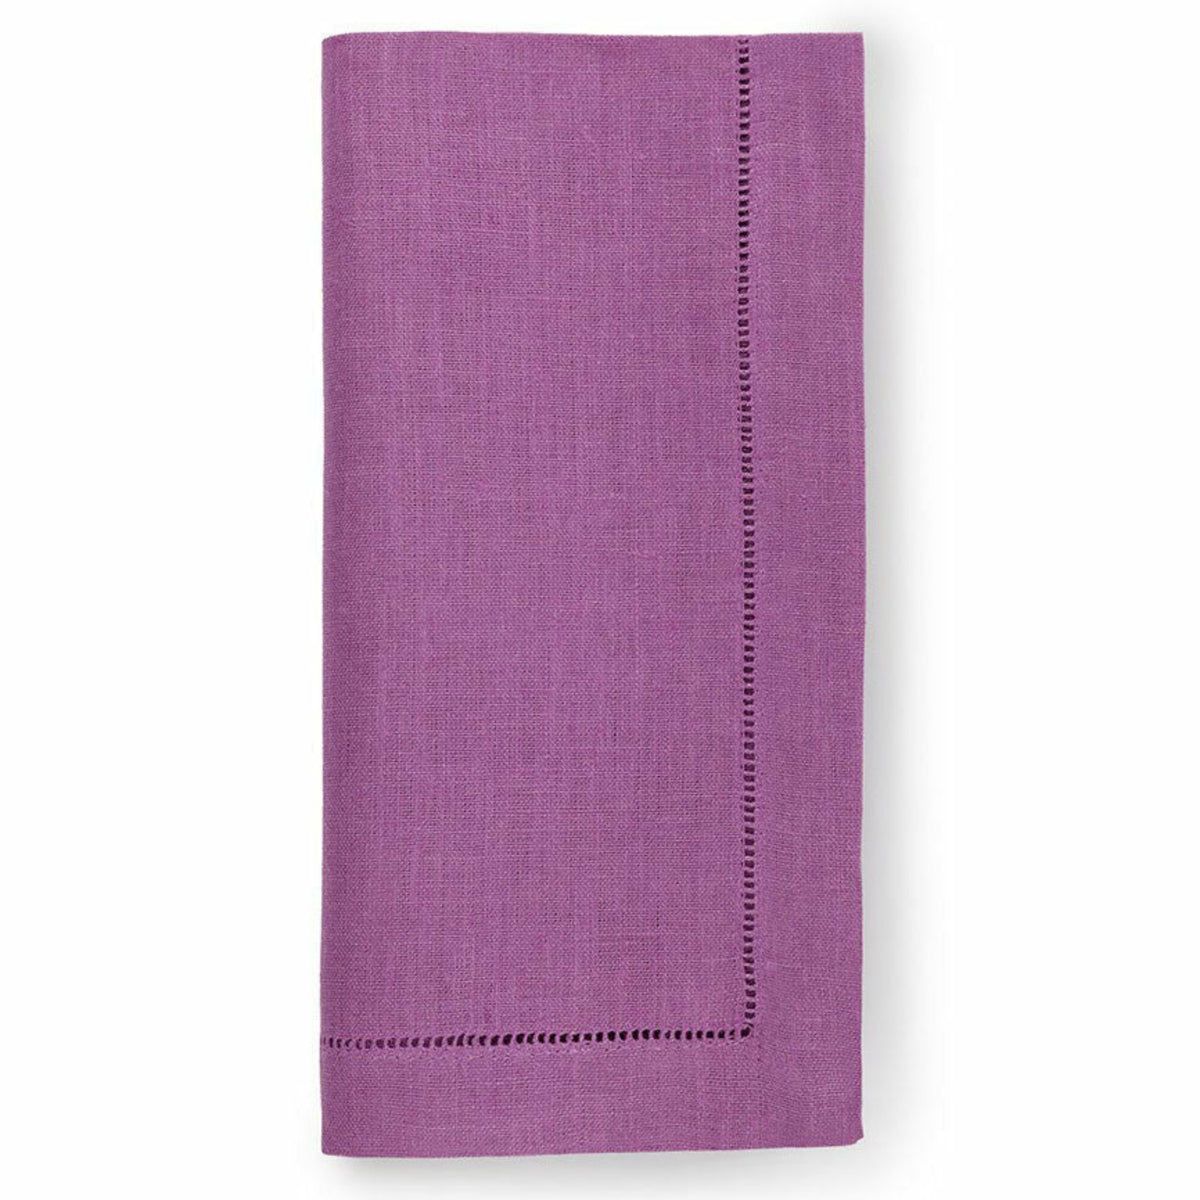 Solid Hemstitched Linen Guest Towel - Luxury Neutrals